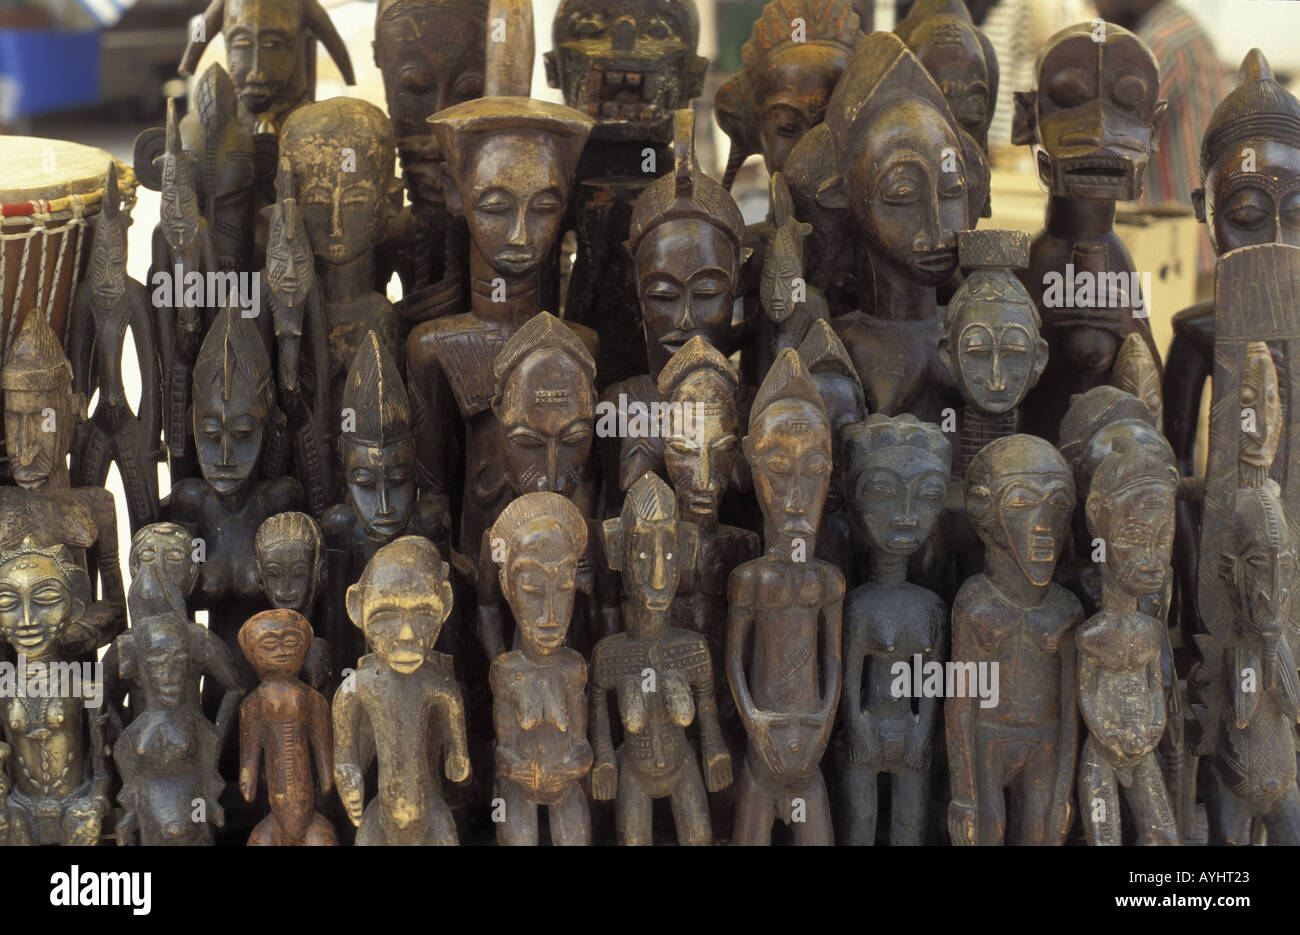 Afrikanische Holzfiguren auf dem Flohmarkt Salon de Provence Frankreich Foto Stock